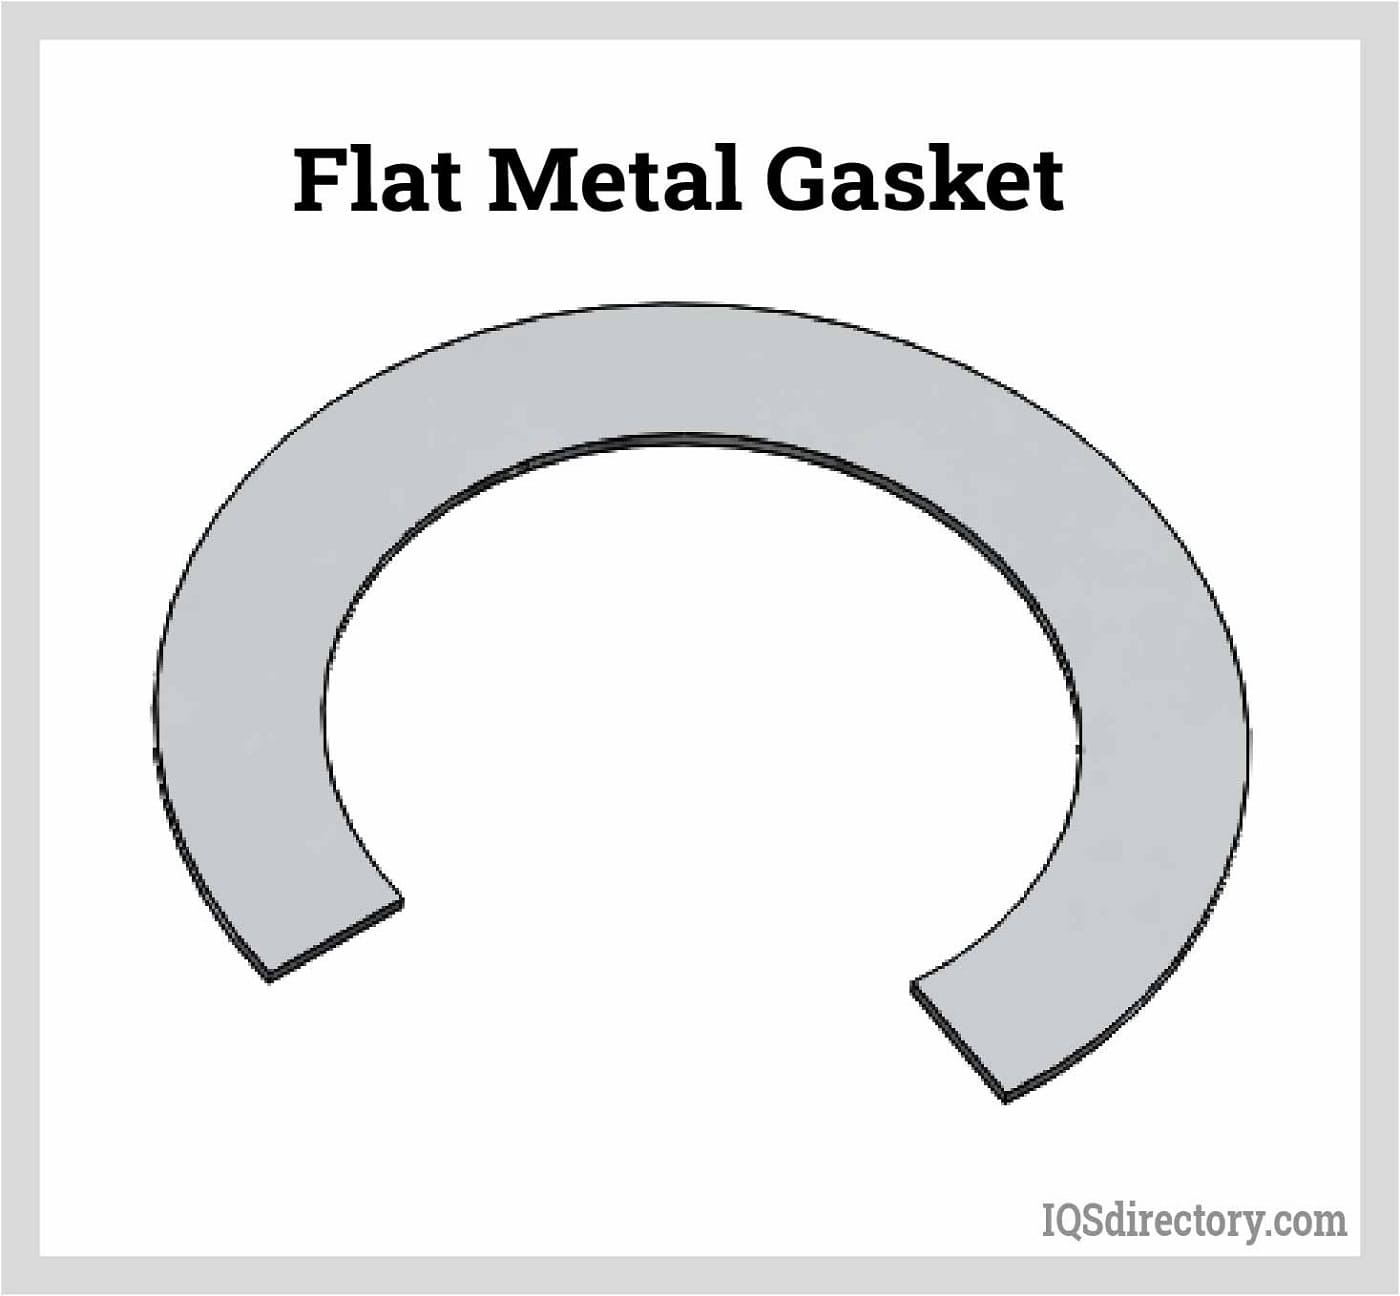 Flat Metal Gaskets